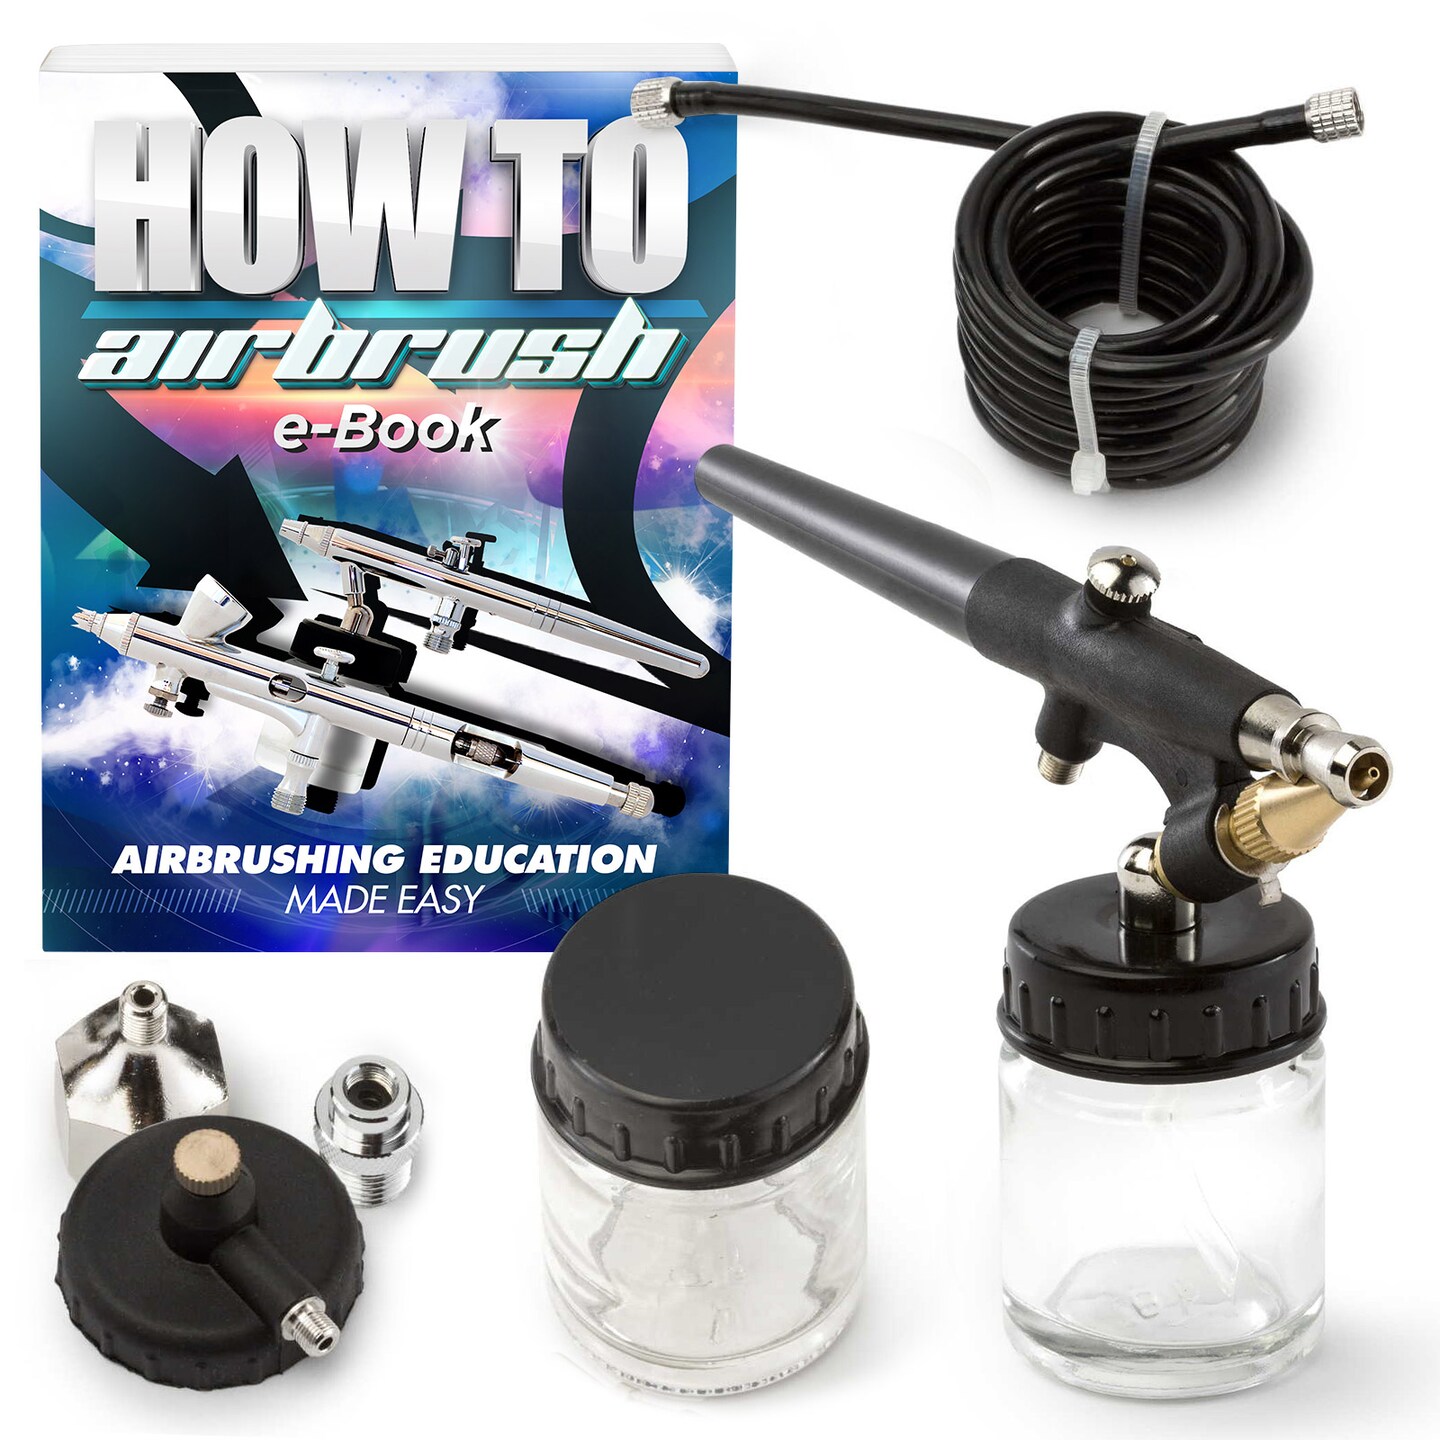 PointZero Single-action 22cc Siphon-feed Airbrush Set - .8mm Nozzle